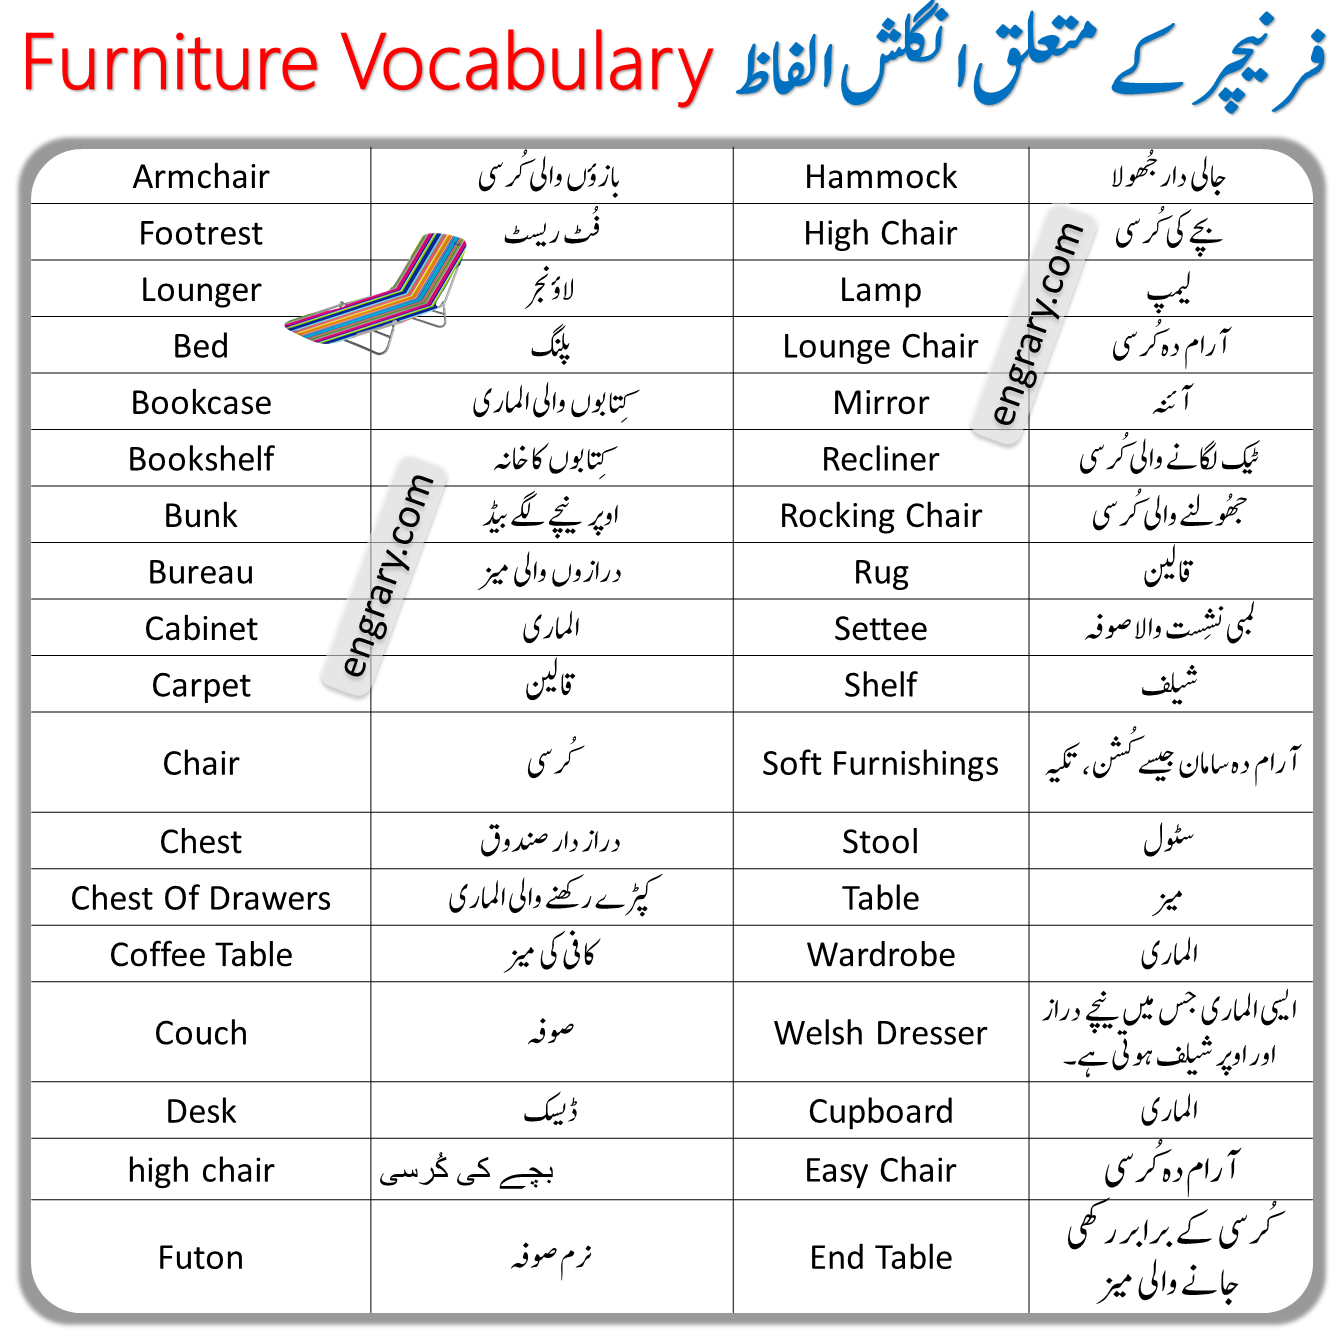 Rocking Chair Meaning In Urdu - Kaley Furniture